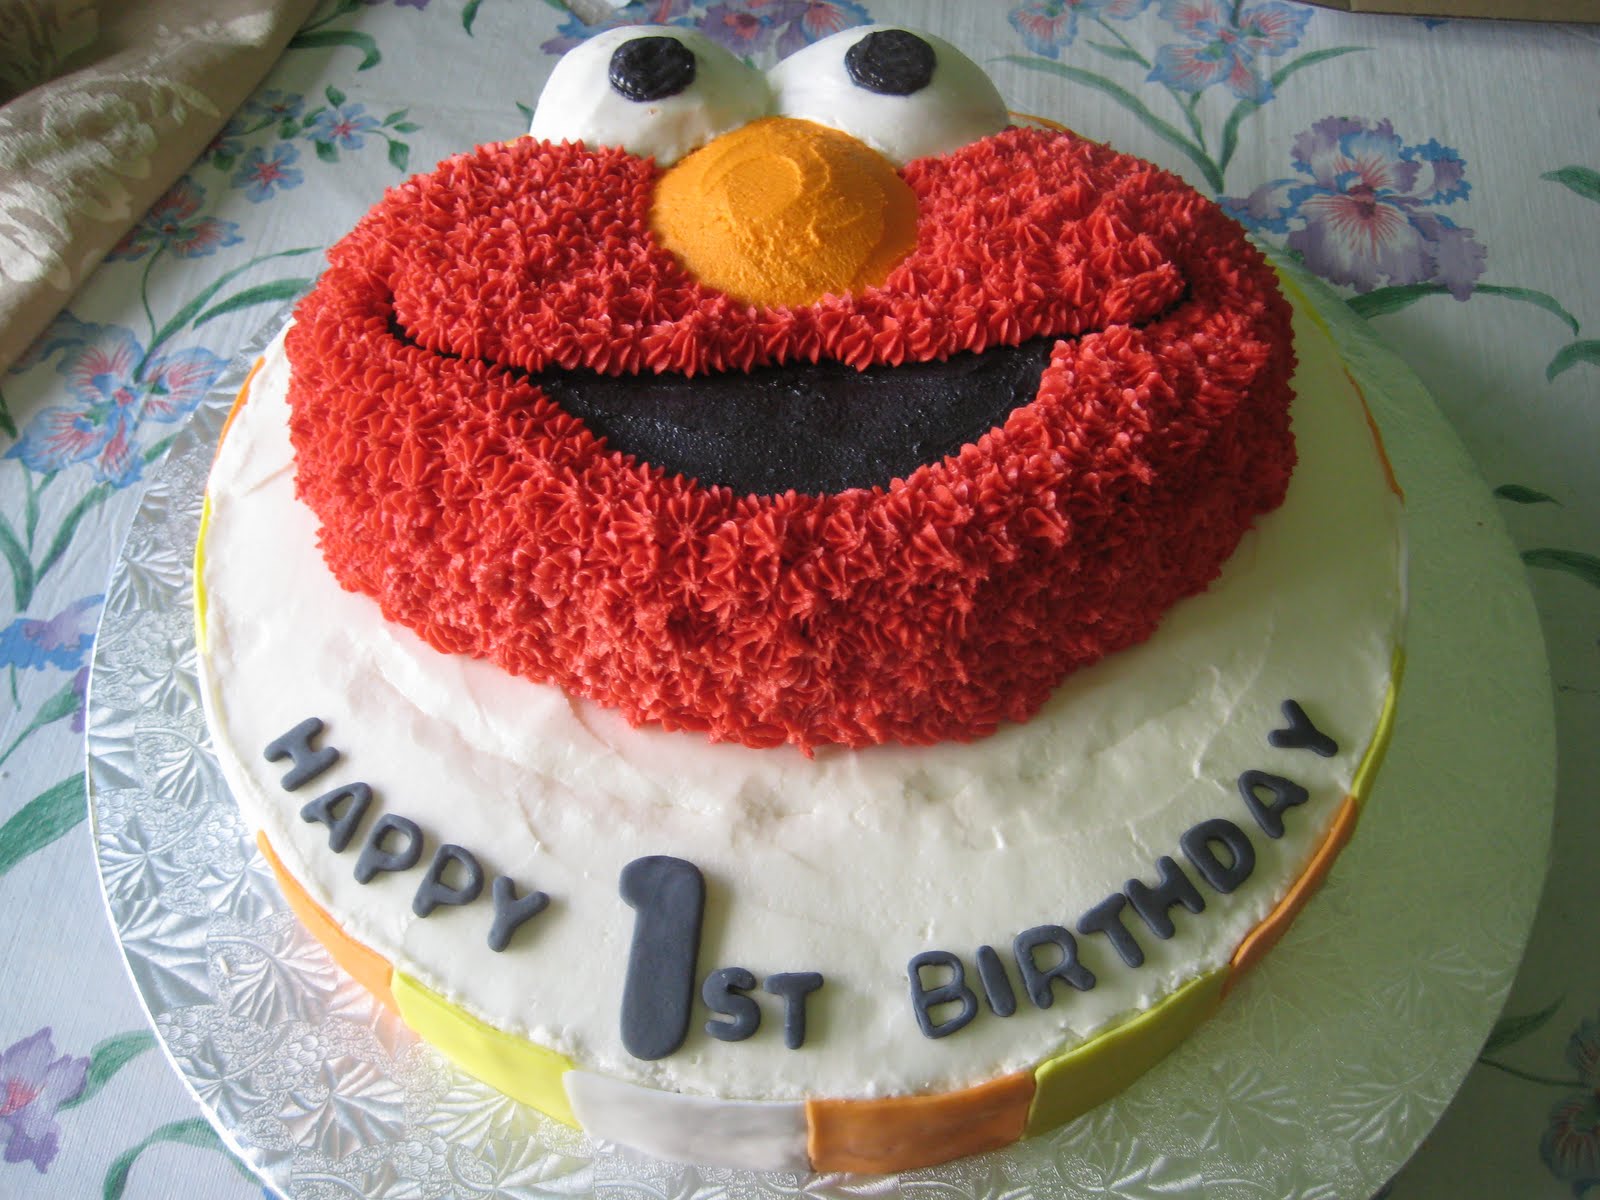 Elmo Cakes - Decoration Ideas | Little Birthday Cakes